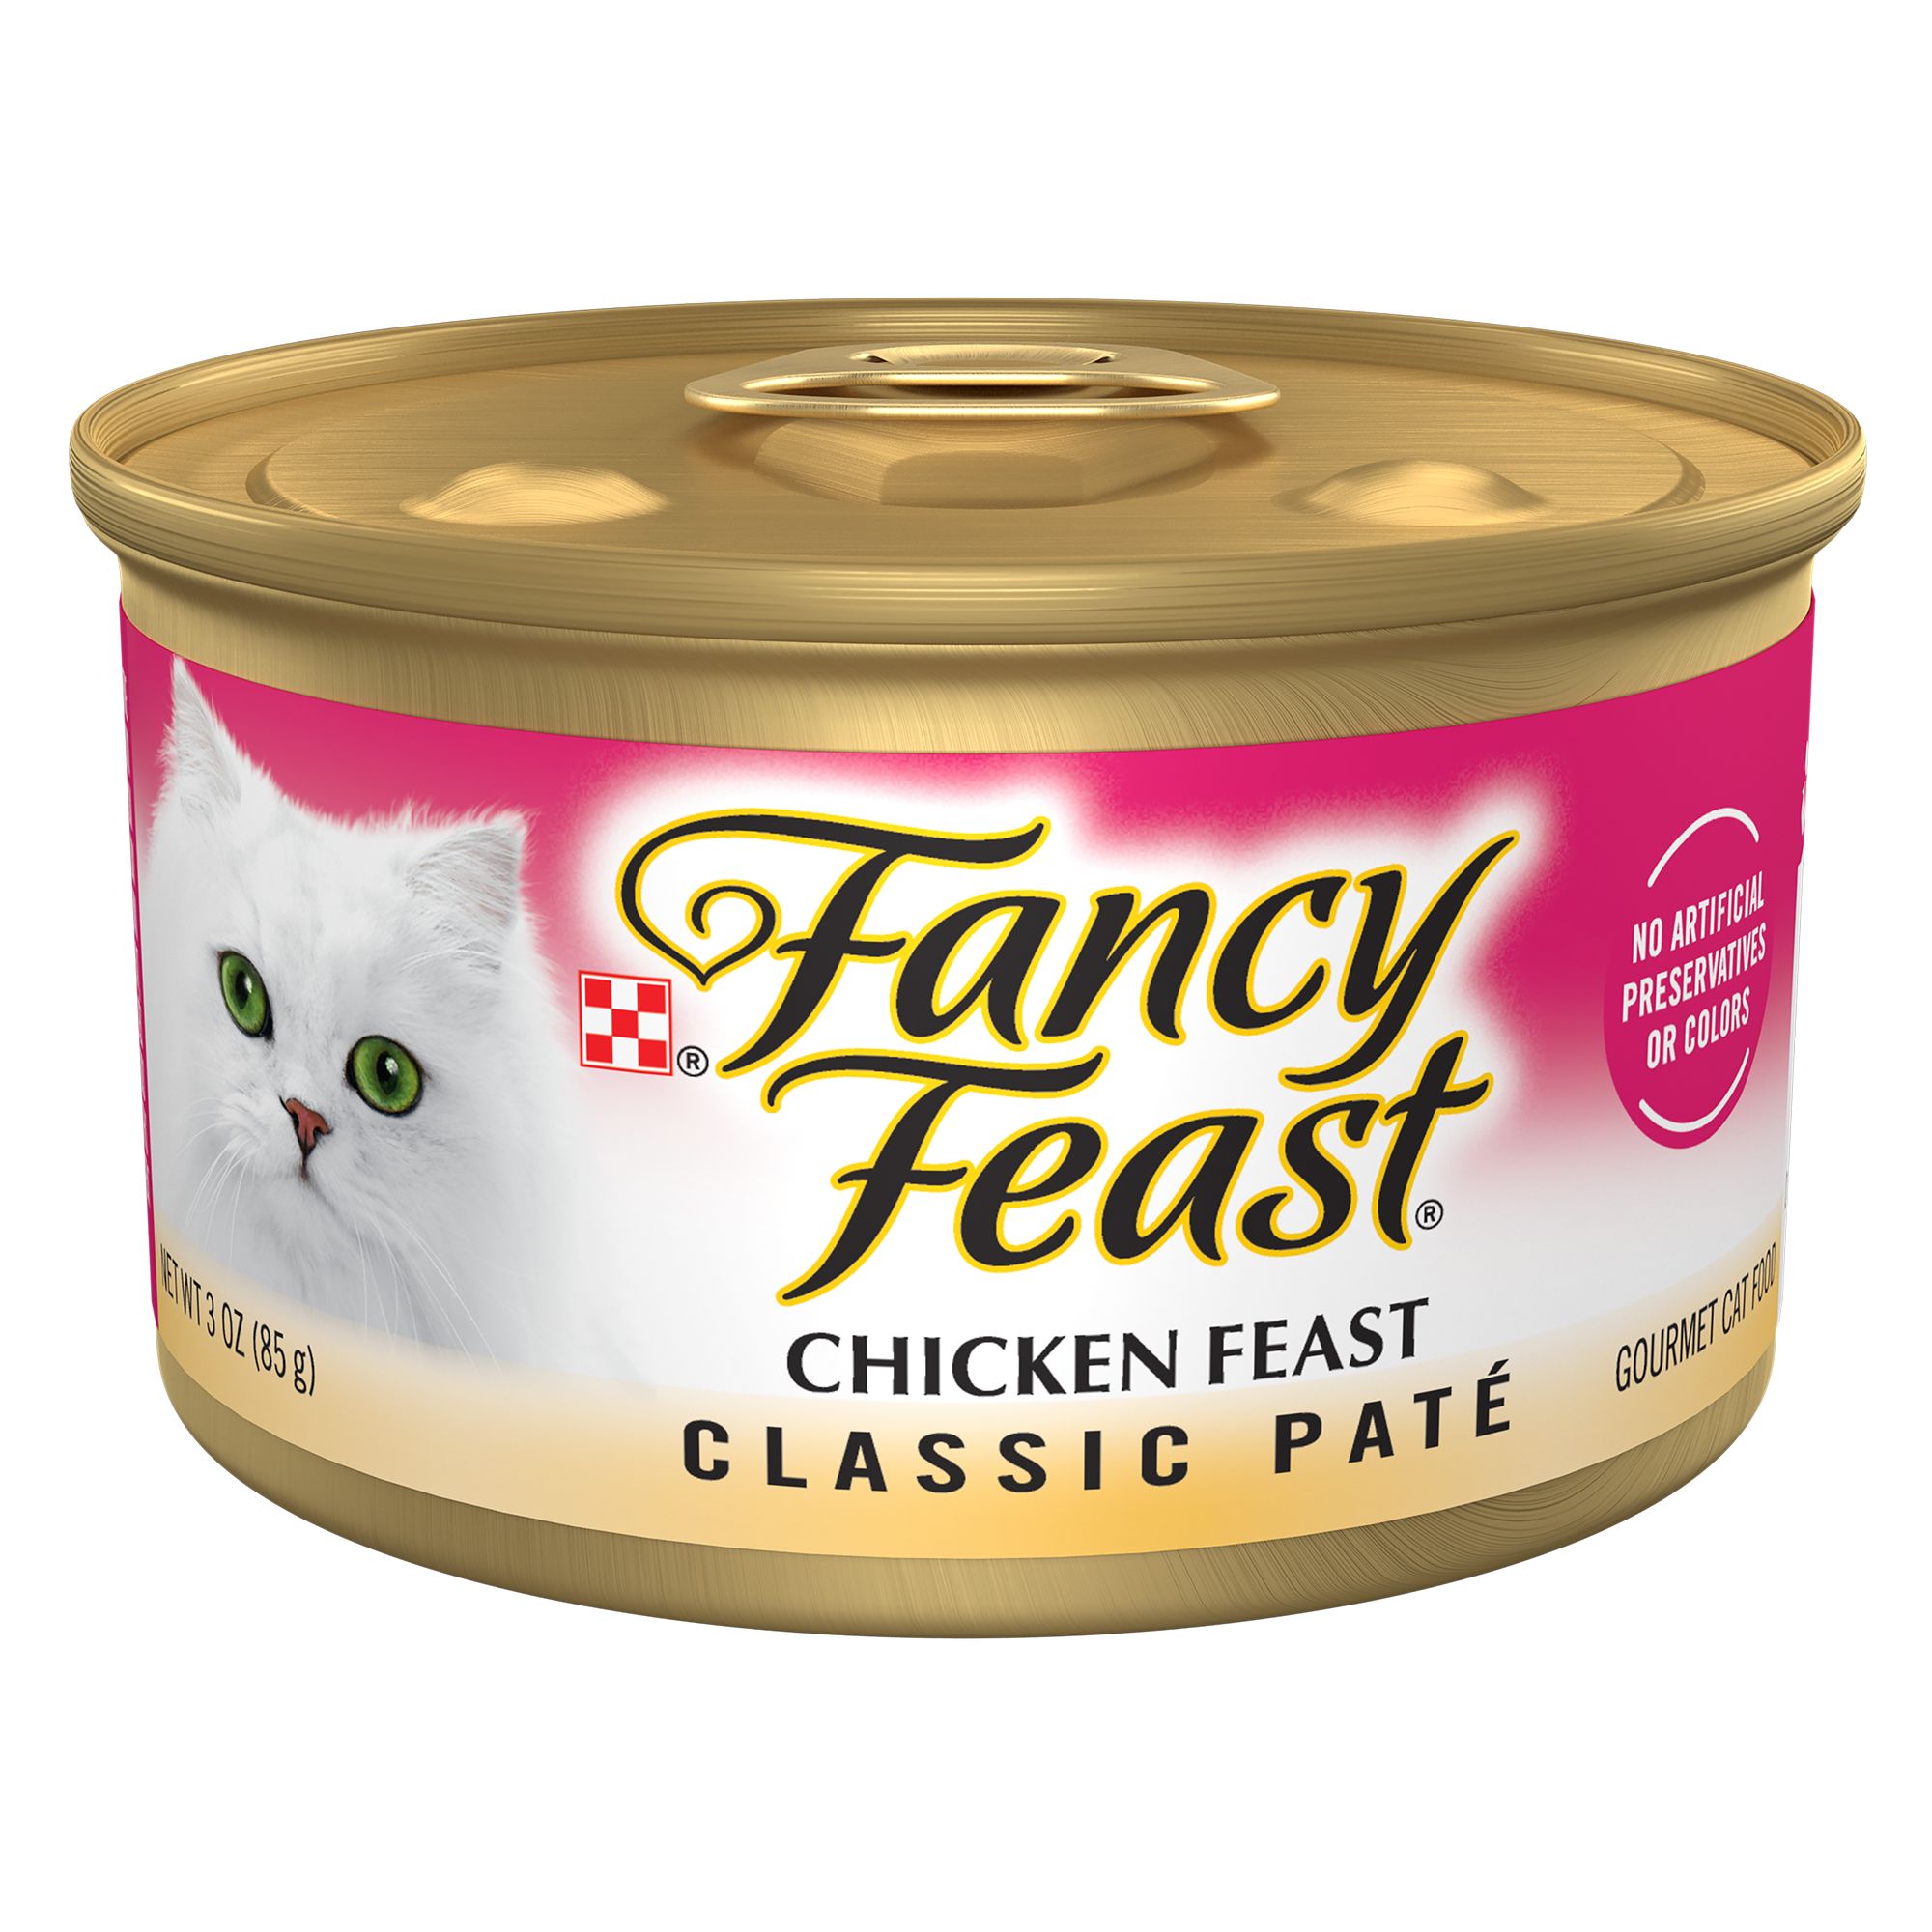 wholehearted cat food petsmart